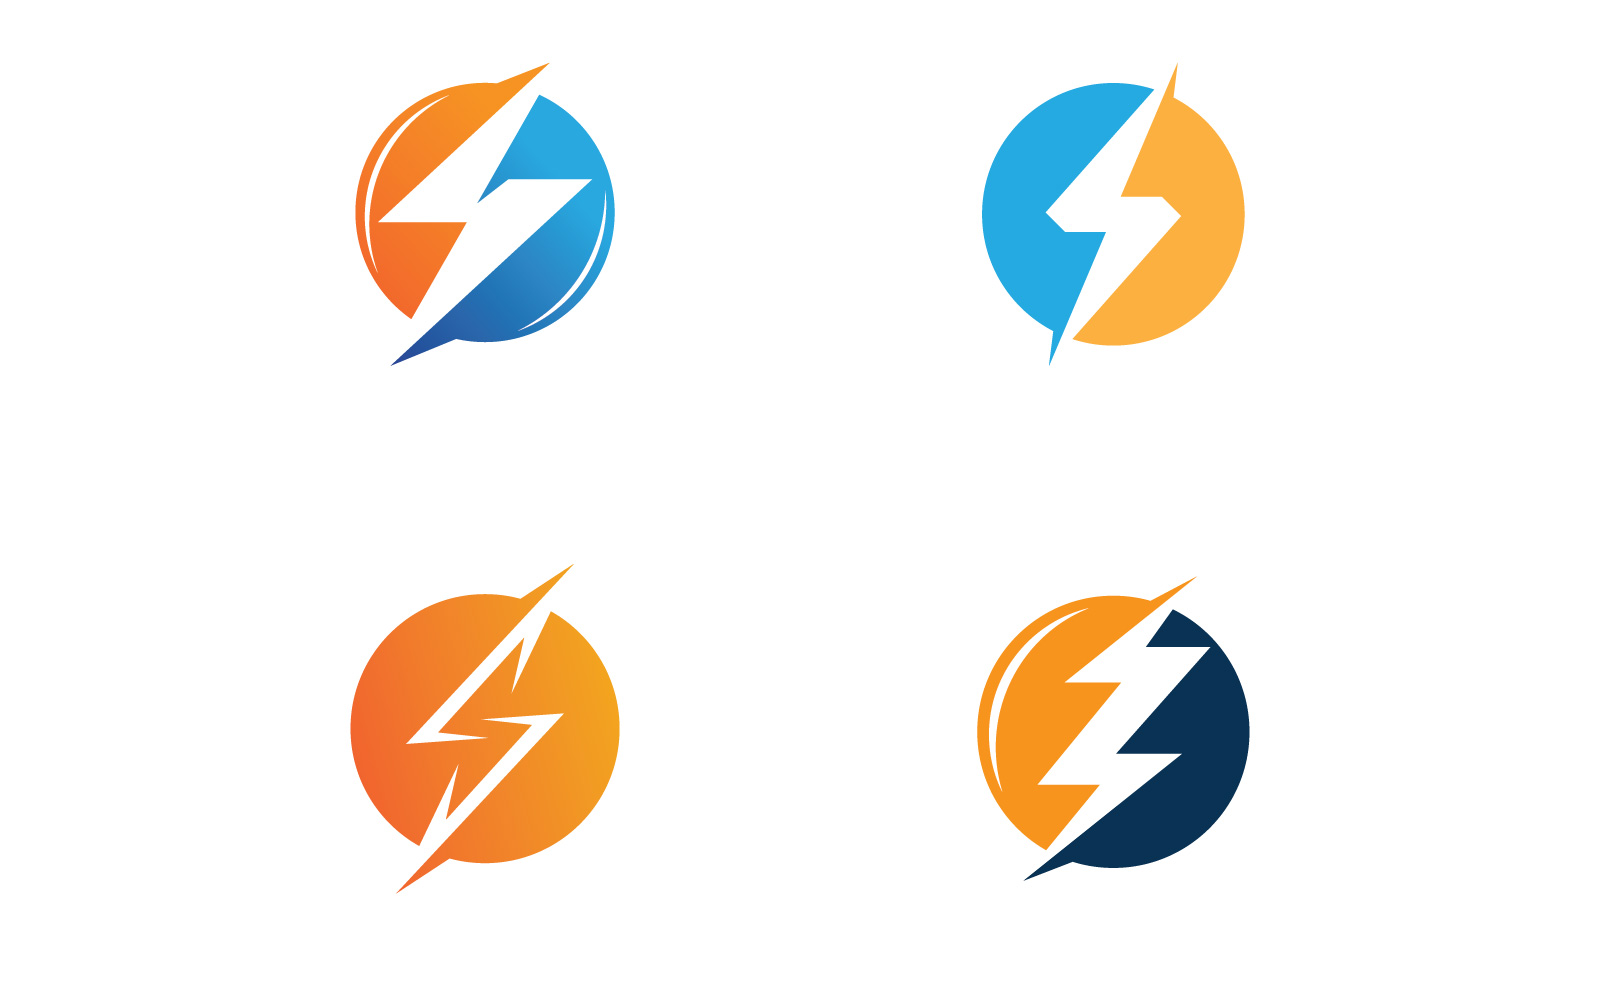 flash logo template